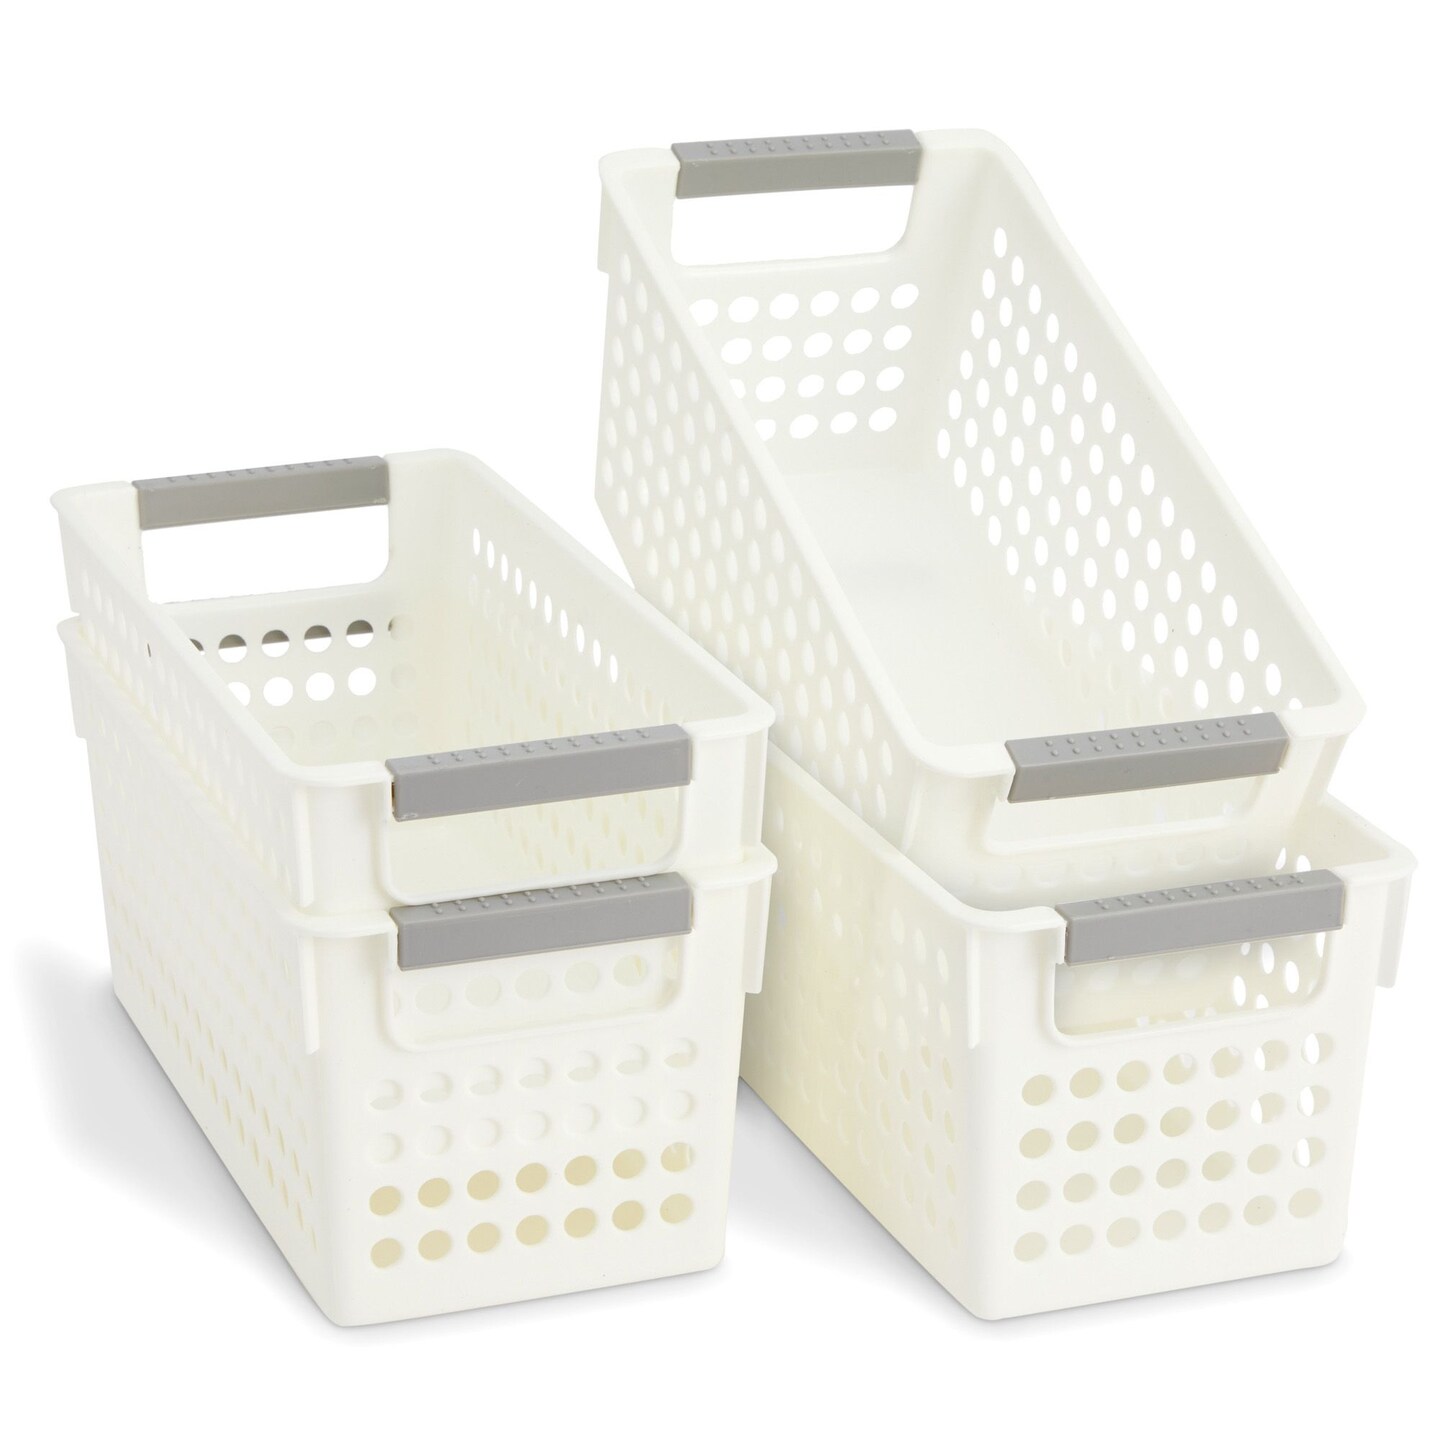 Bathroom Storage Baskets And Organization 